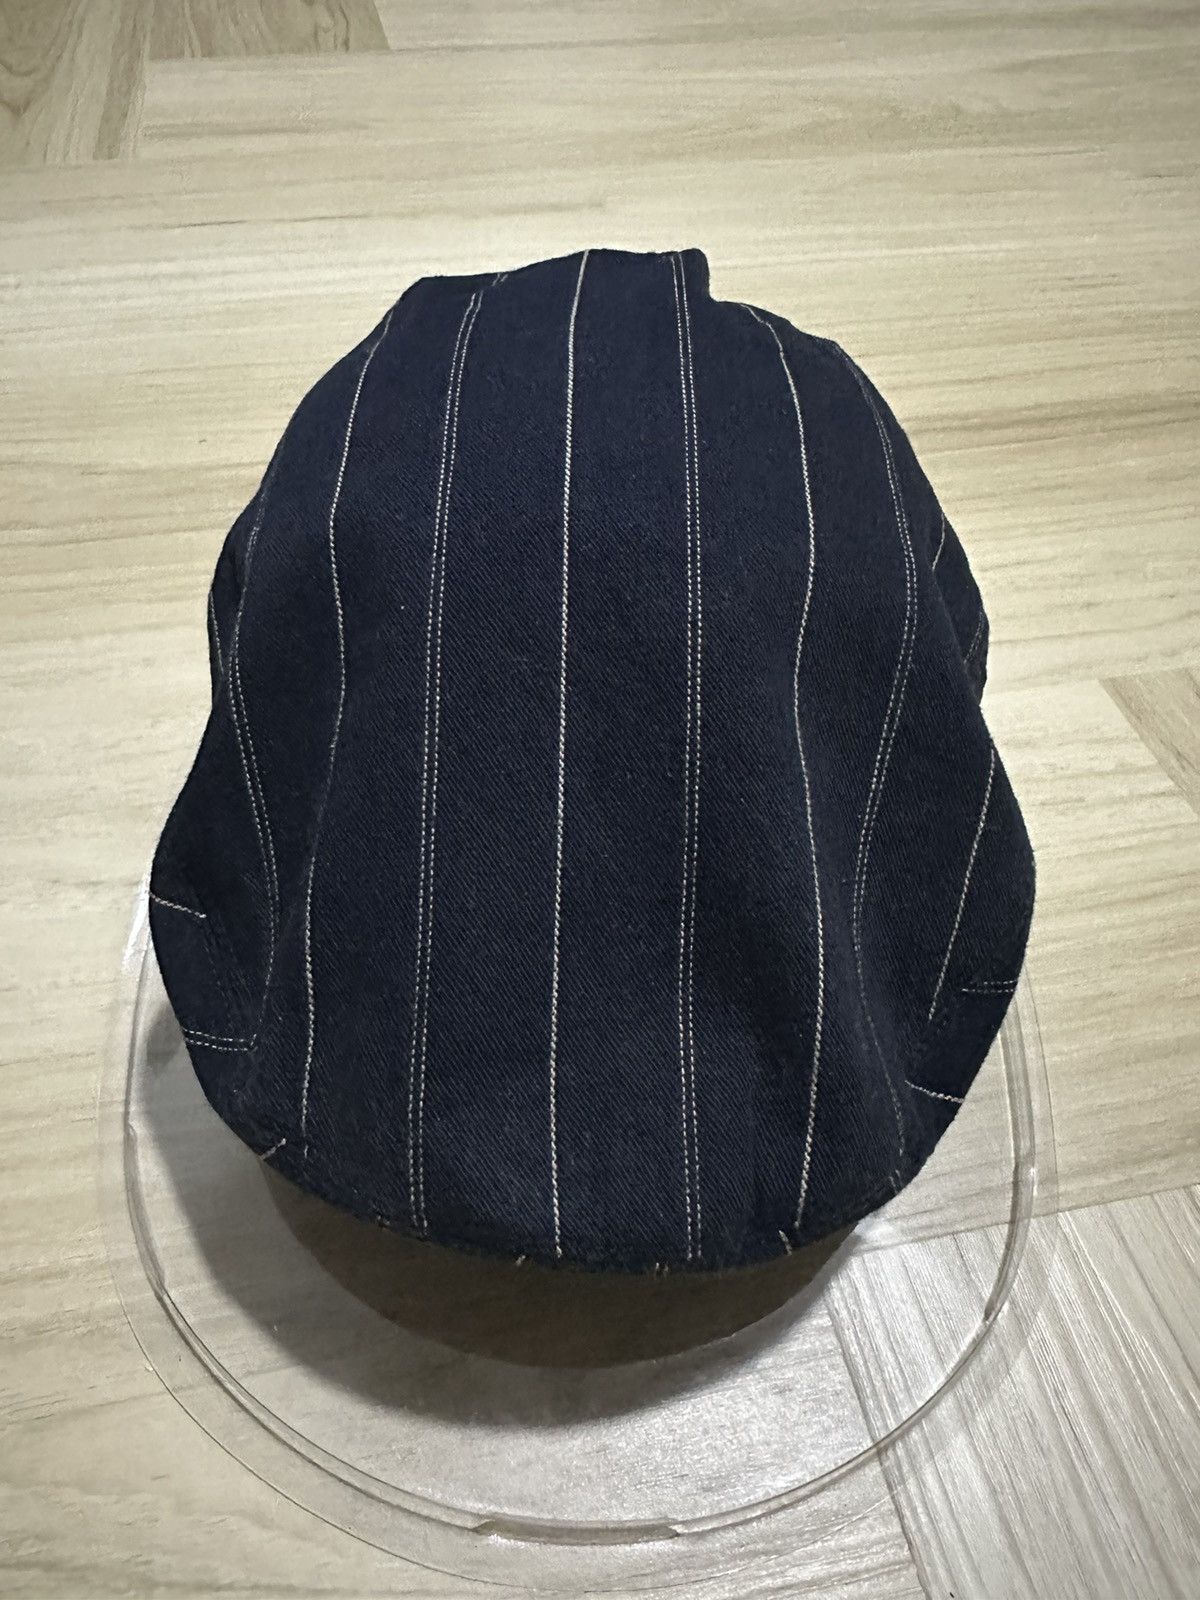 Polo Ralph Lauren Polo Ralph Lauren flat cap hat vintage | Grailed